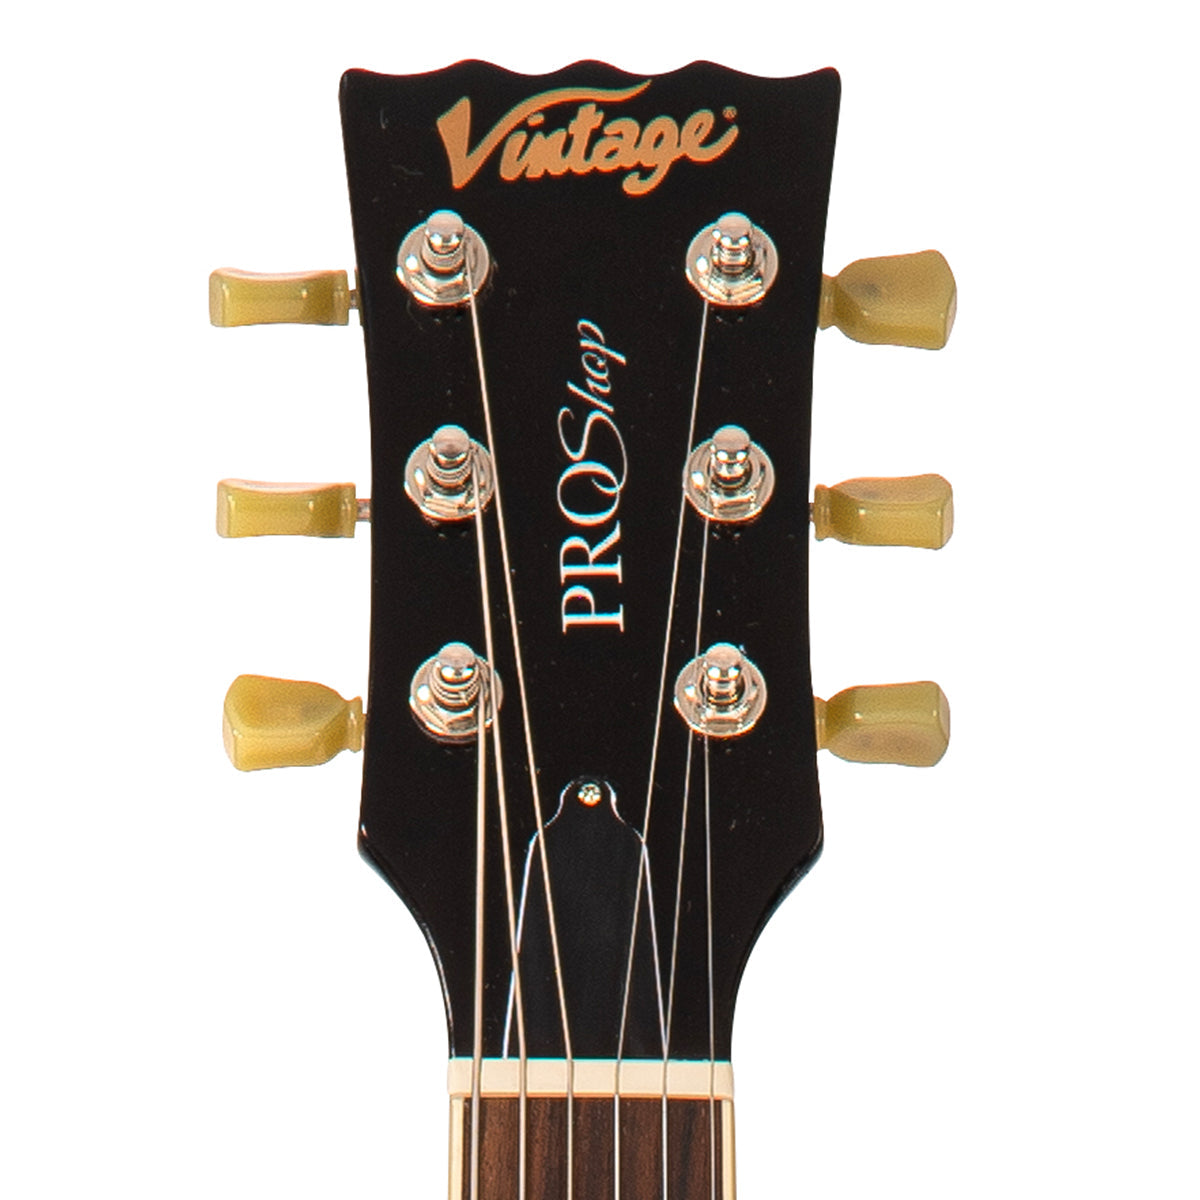 Vintage V100 ProShop Unique ~ Green Alumitone, Electric Guitars for sale at Richards Guitars.